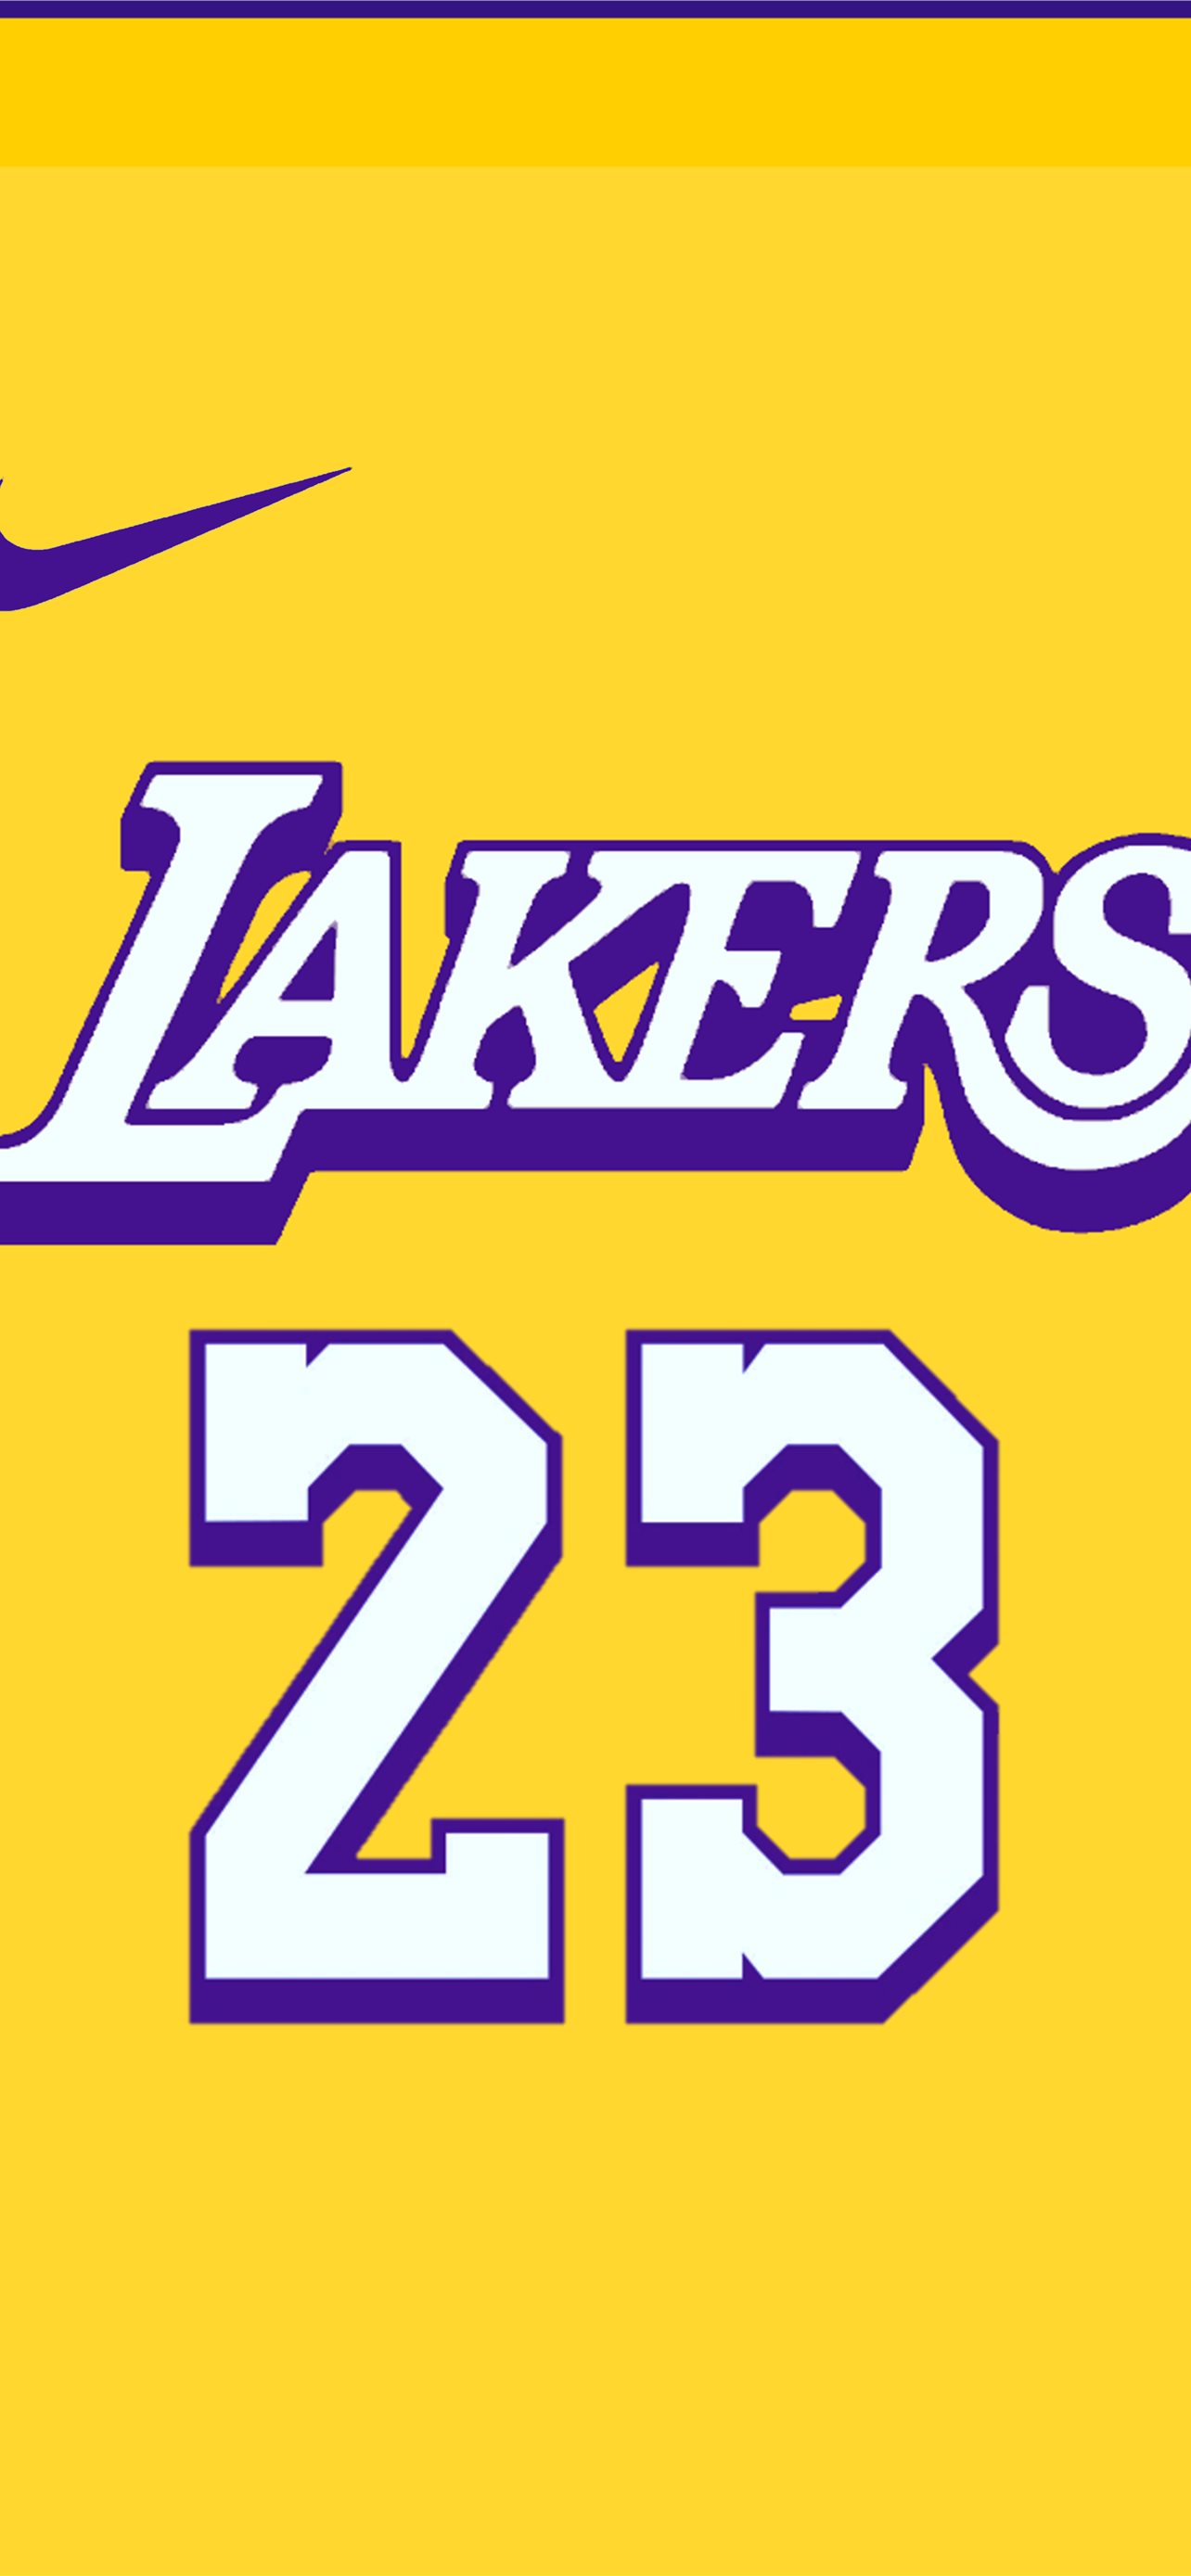 Los Angeles Lakers wallpaper by ElnazTajaddod  Download on ZEDGE  7866